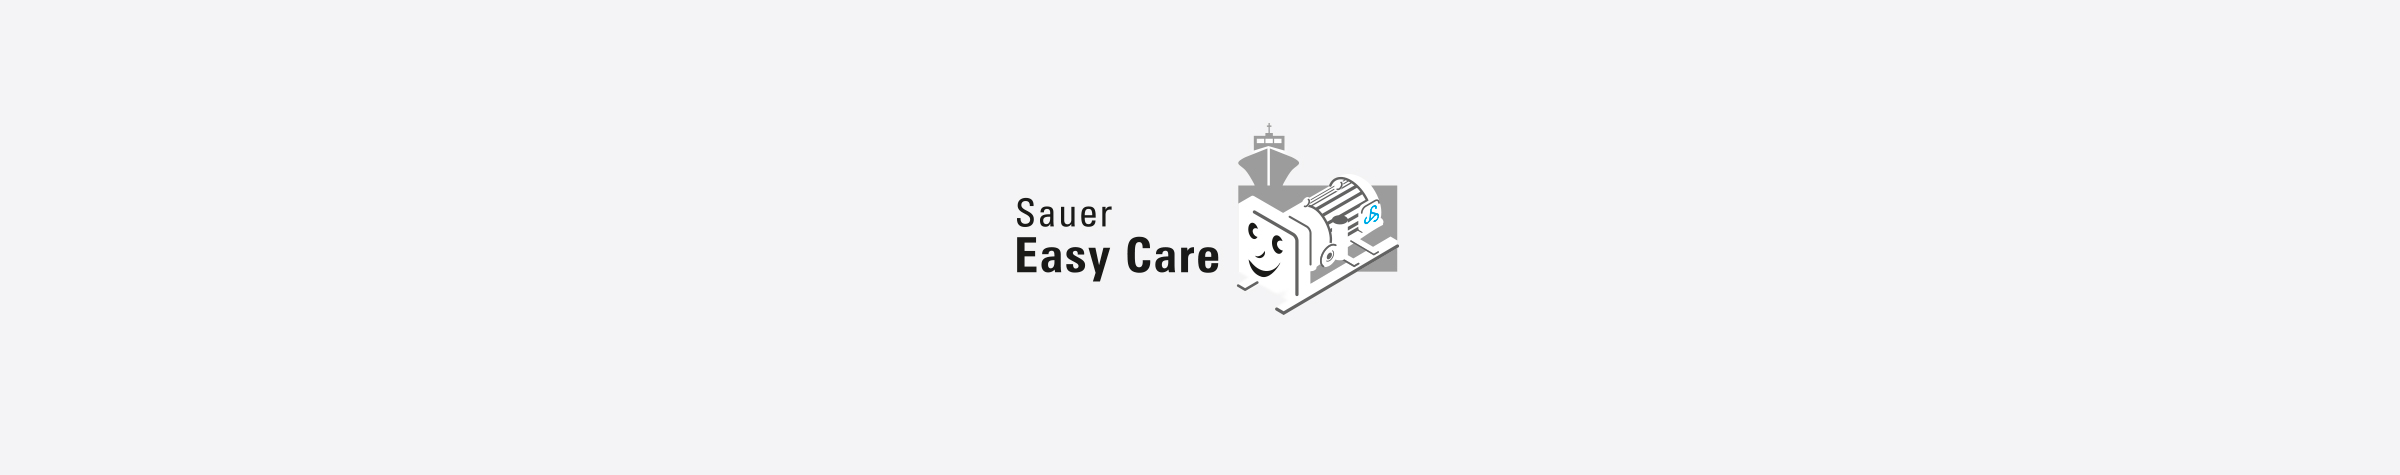 Sauer Easy Care